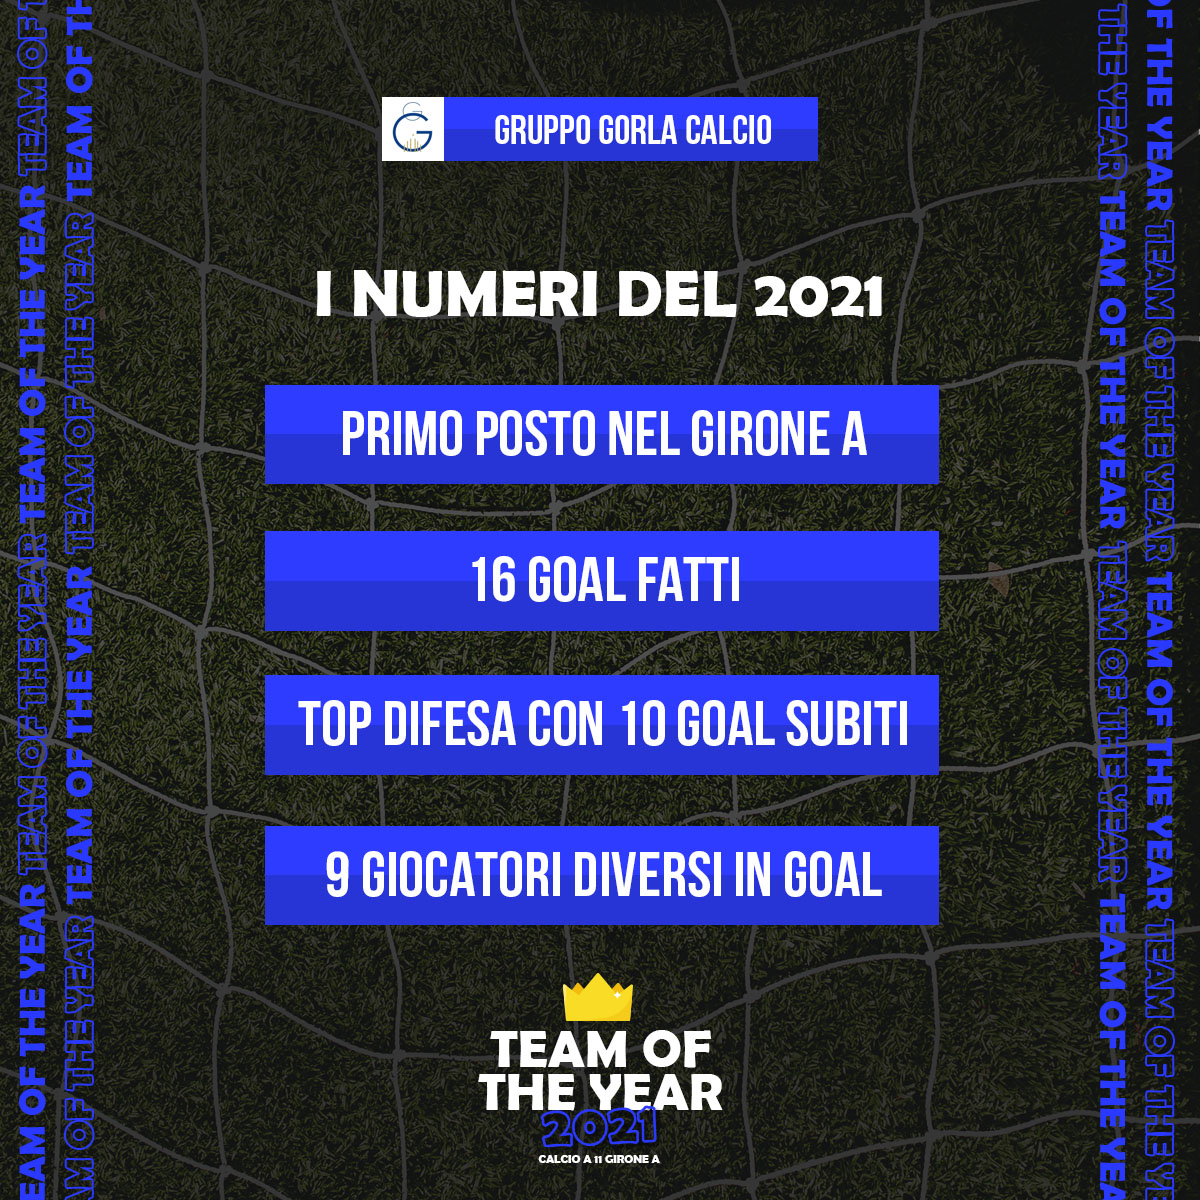 toty 2022 team of the year 2021 milano sportland calcio